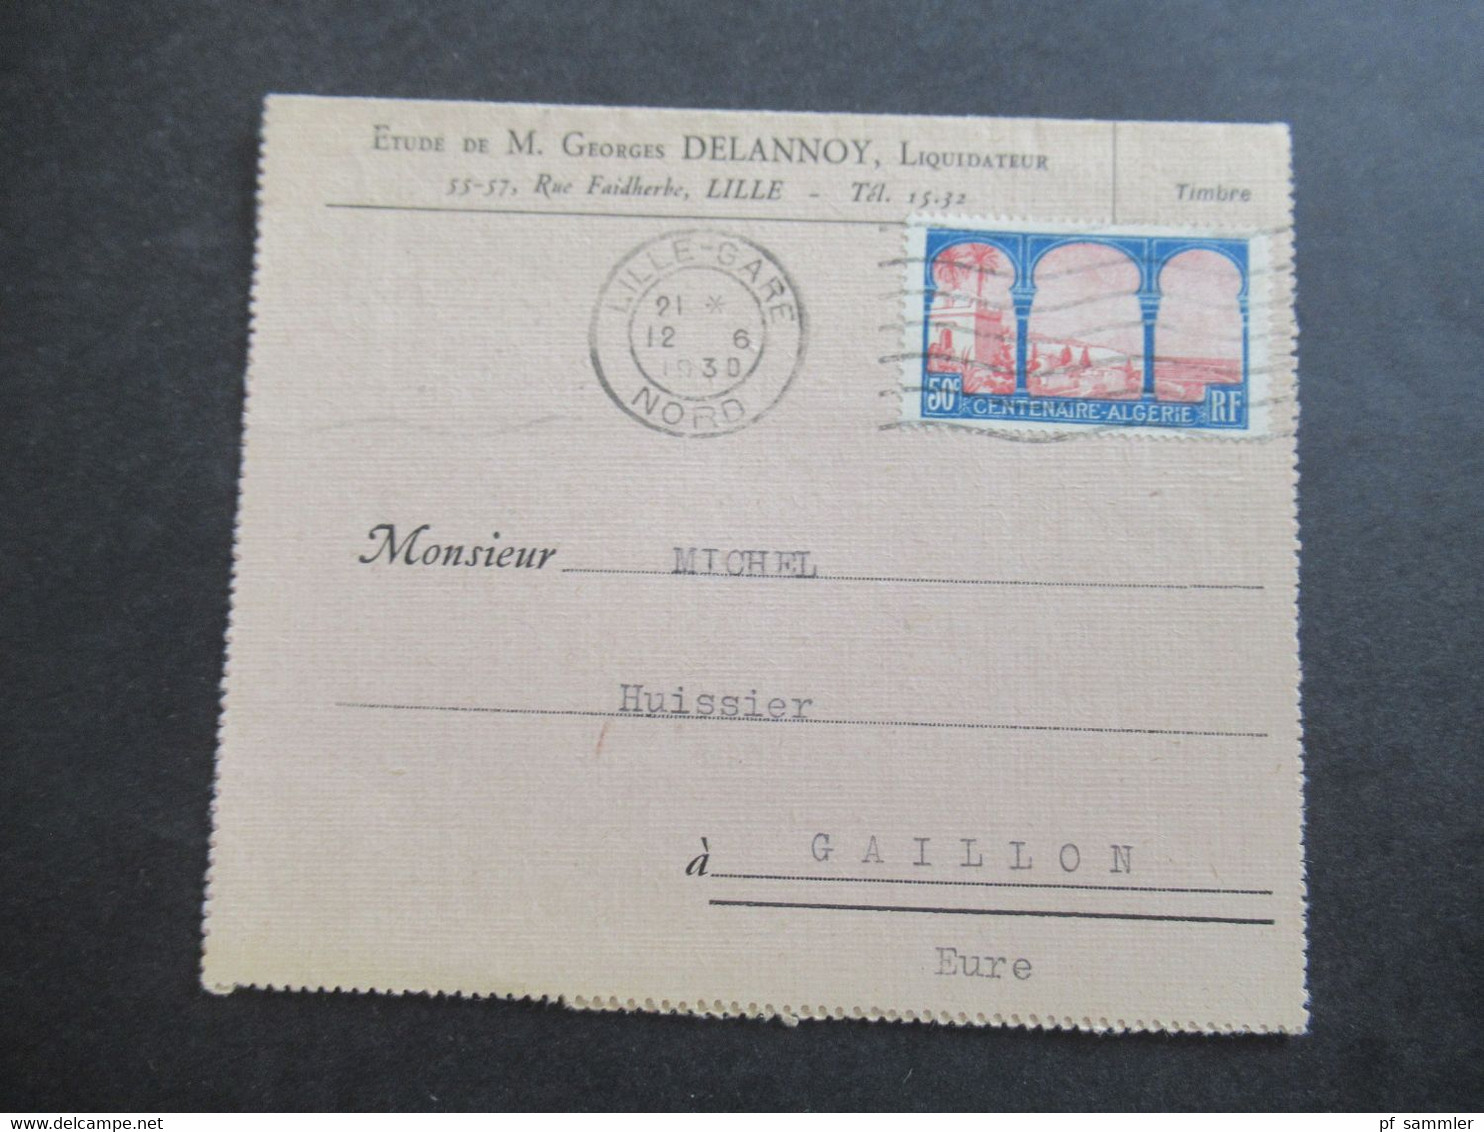 Frankreich 1930 Centeaire Algerie Kartenbrief Etude De M. Geotges Delannoy, Liquidateur Lille Nach Gaillon Gesendet - Covers & Documents